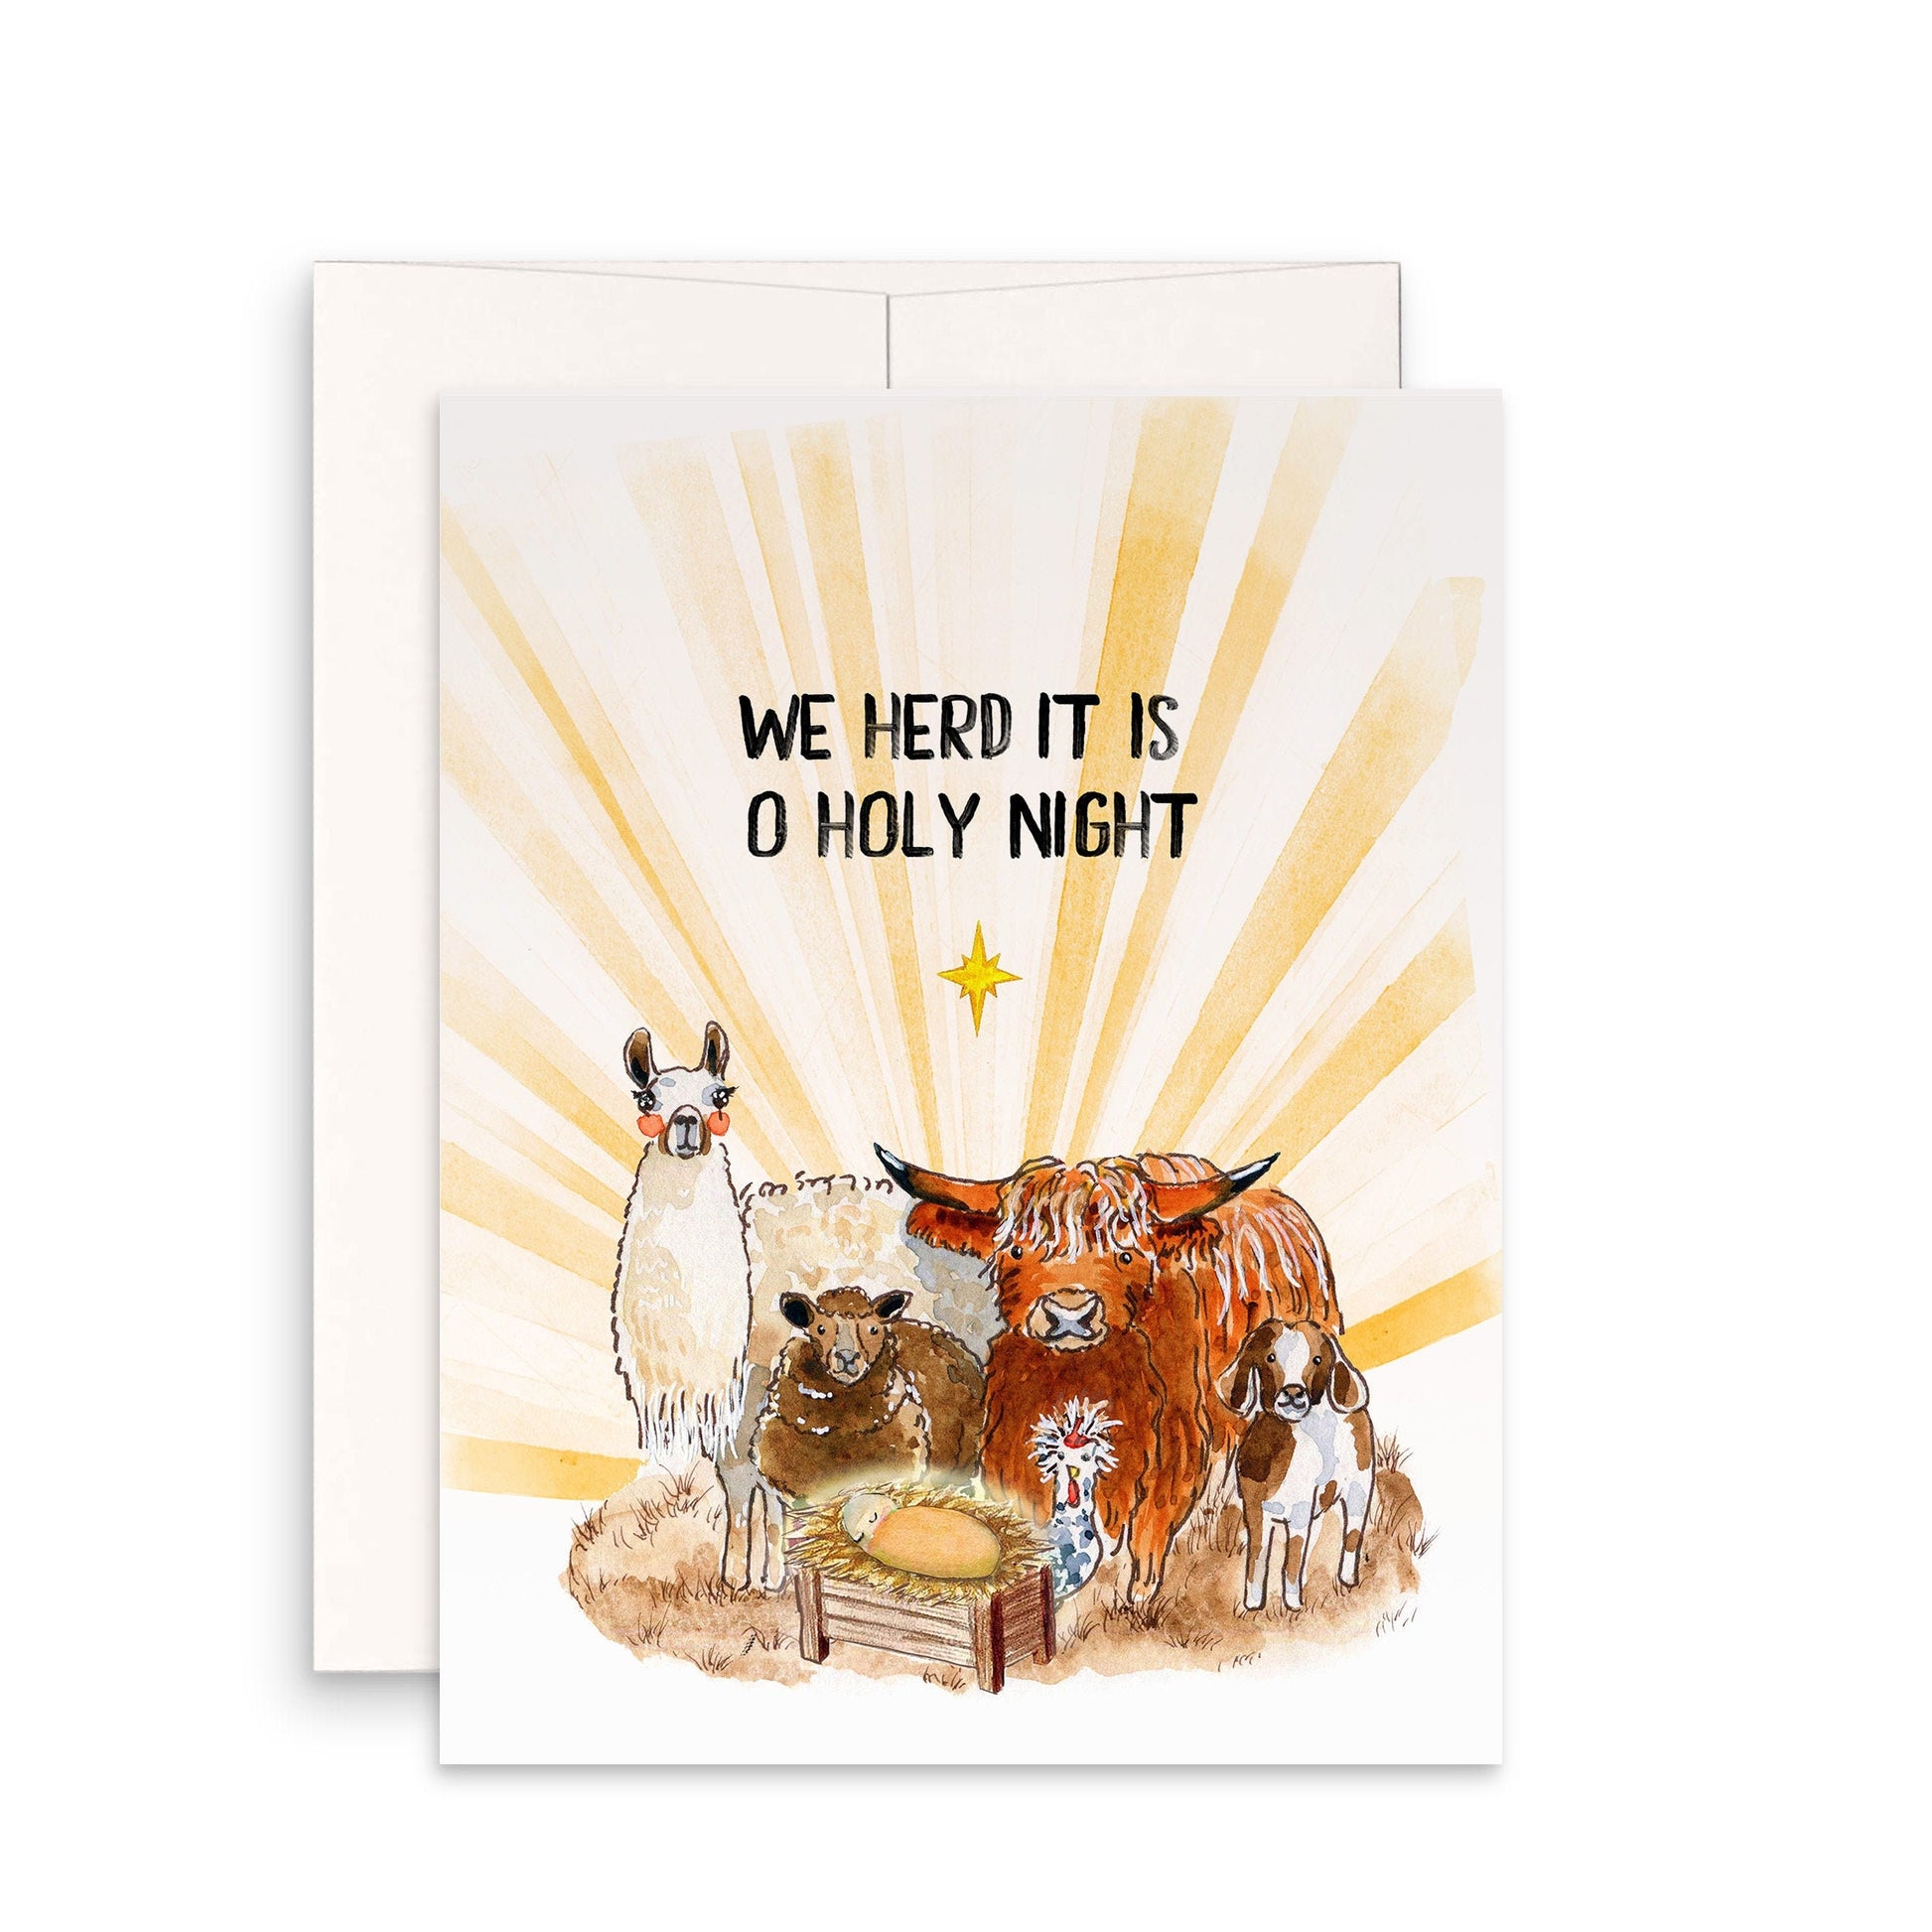 Watercolor Nativity Scene Farm Animals Christmas Cards - Oh Holy Night - Goat Cow Llama Chicken Sheep